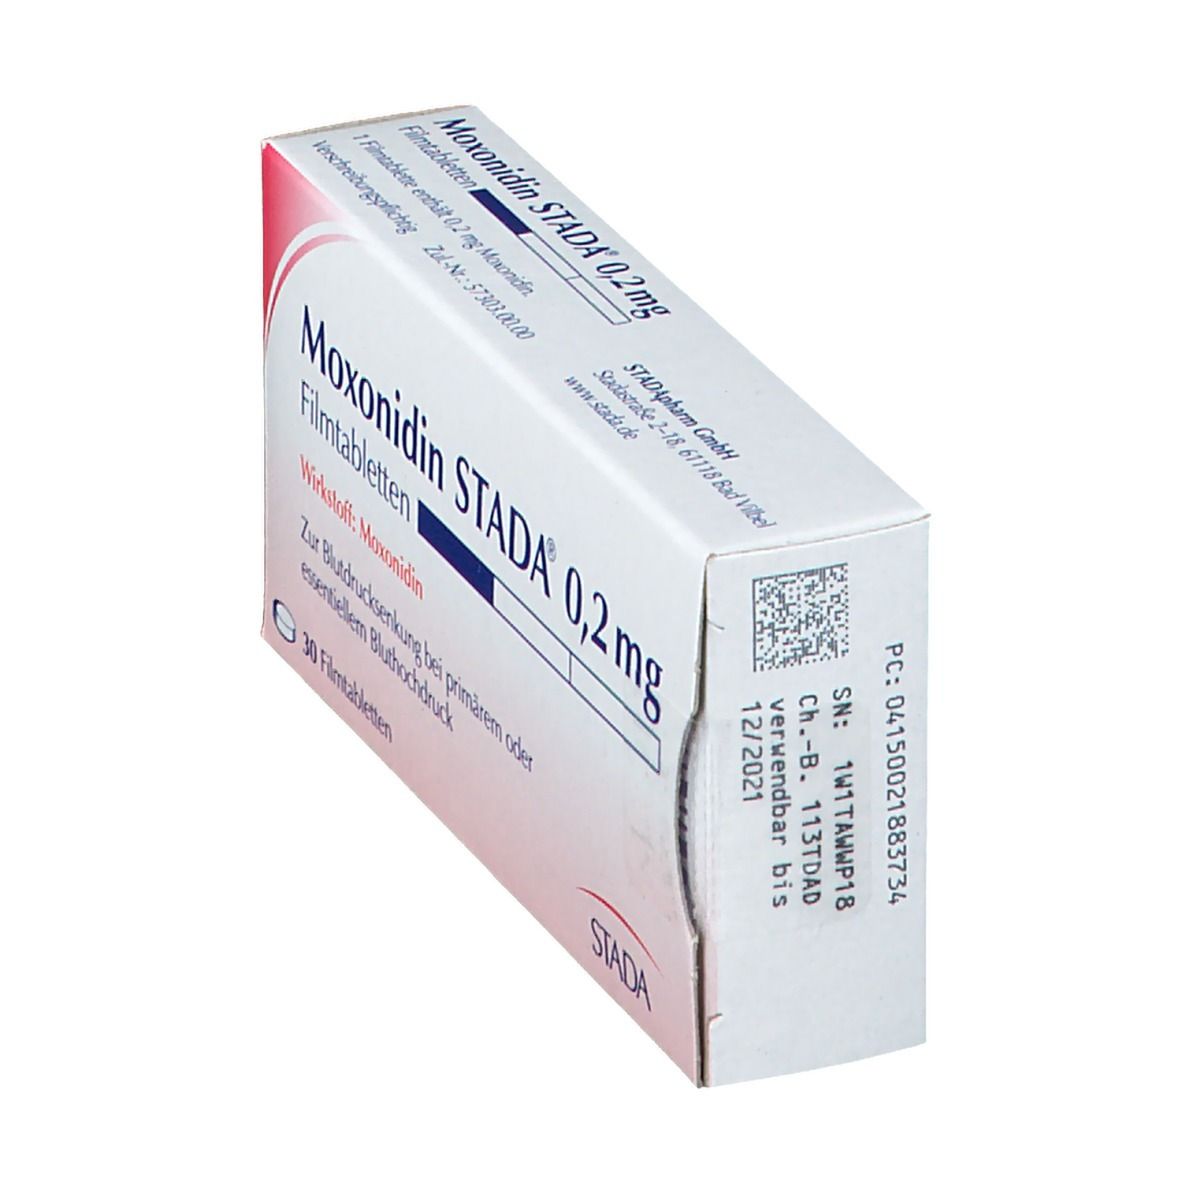 Moxonidin STADA® 0,2 mg